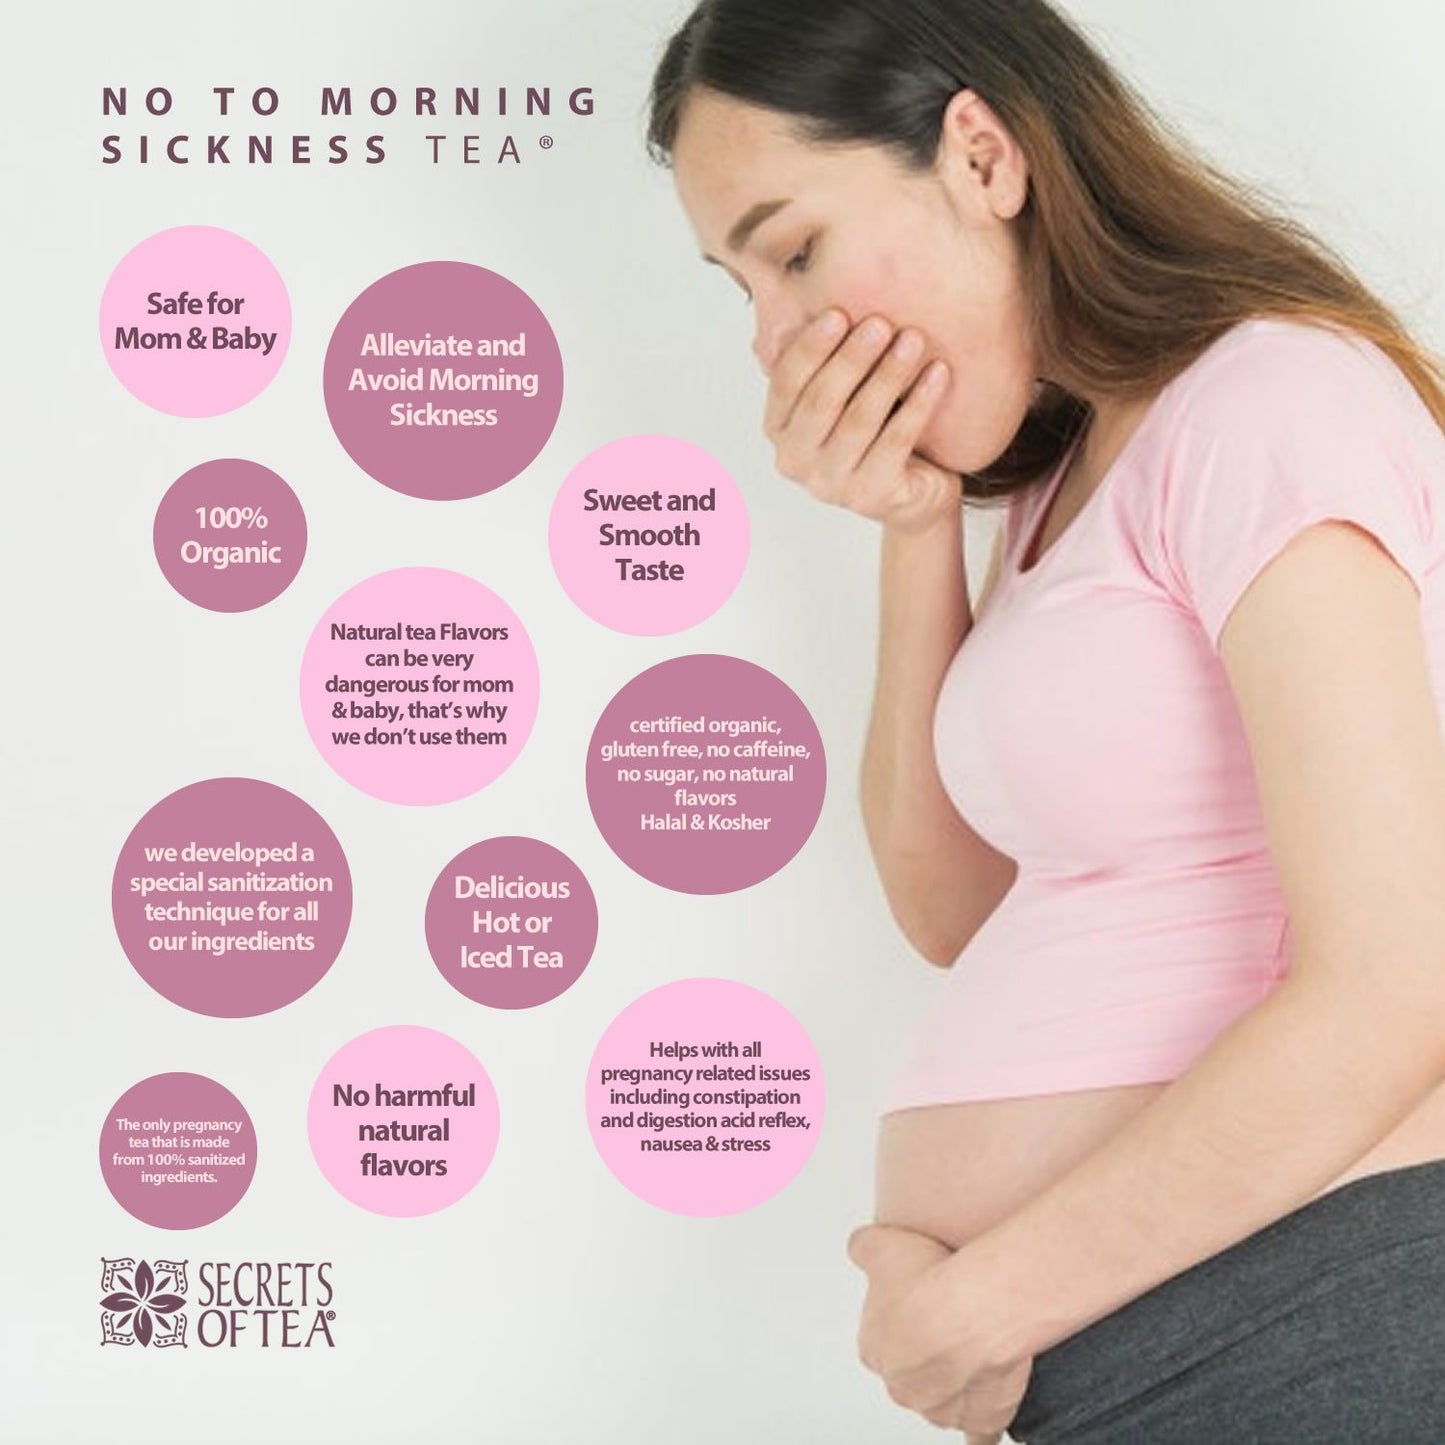 Pregnancy Morning Sickness Tea - Fruits: 40 Cups